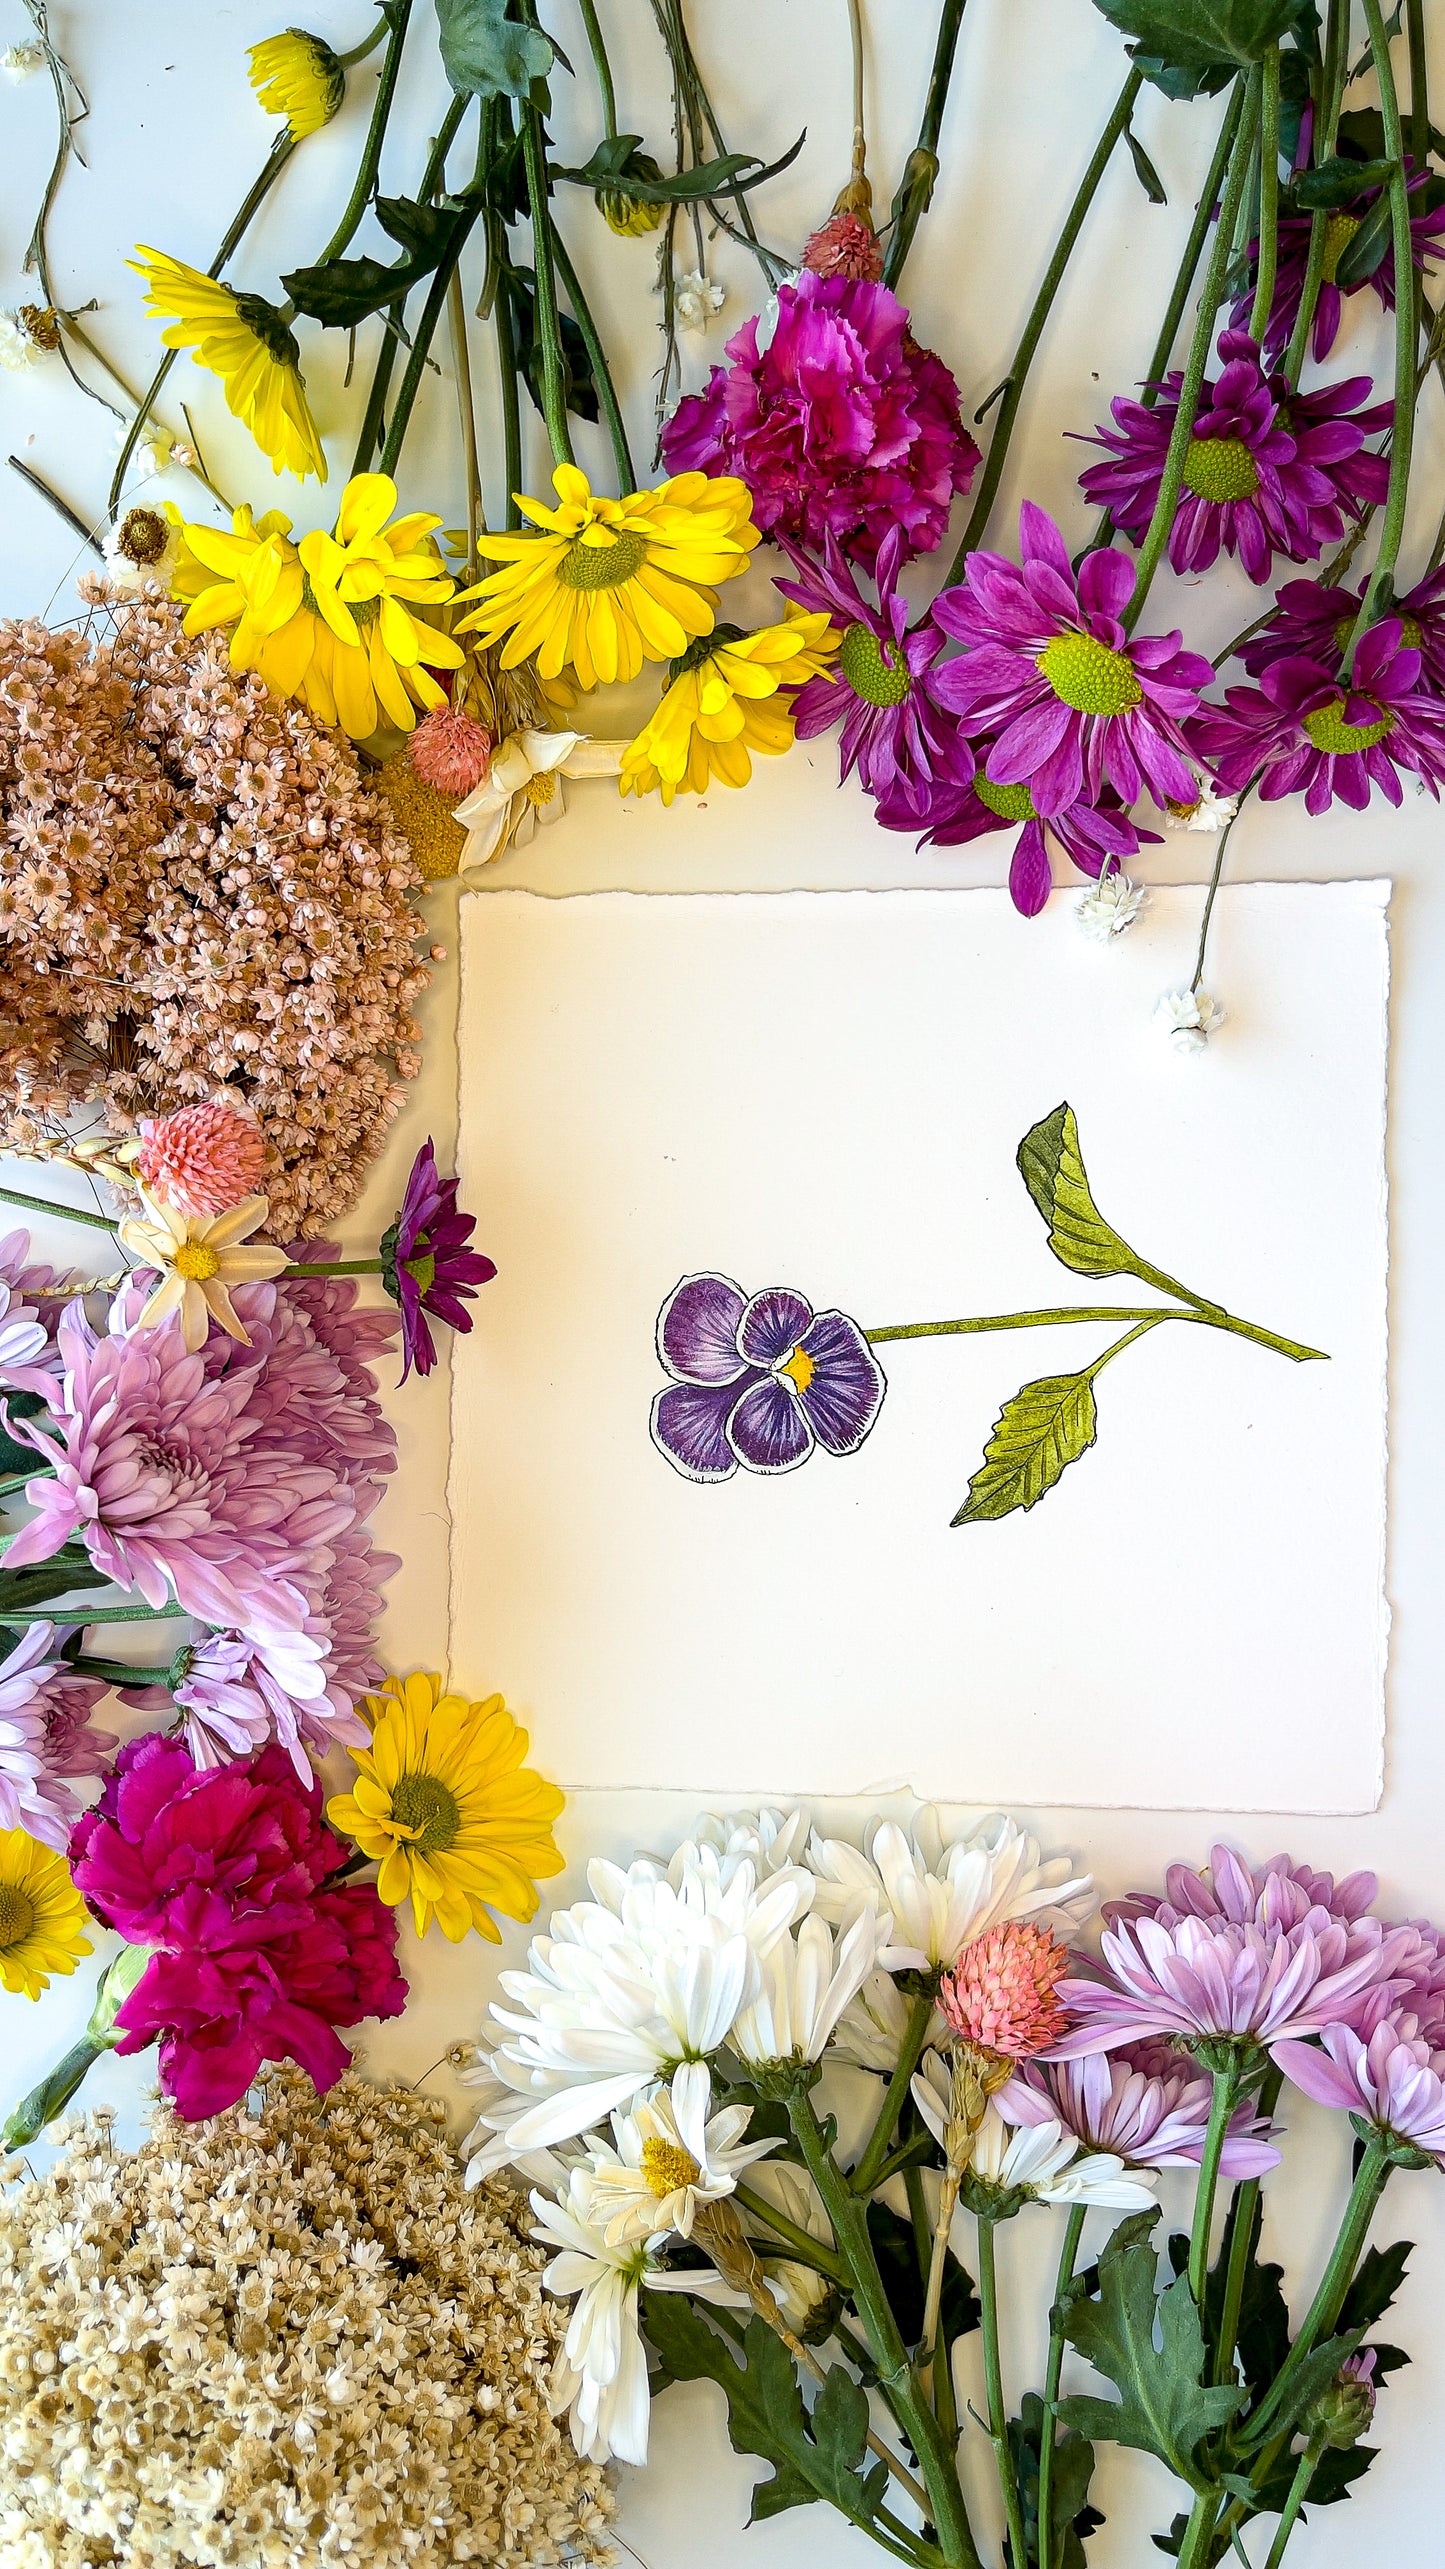 February Violet Watercolor Birth Month Flower Botanical Art Print